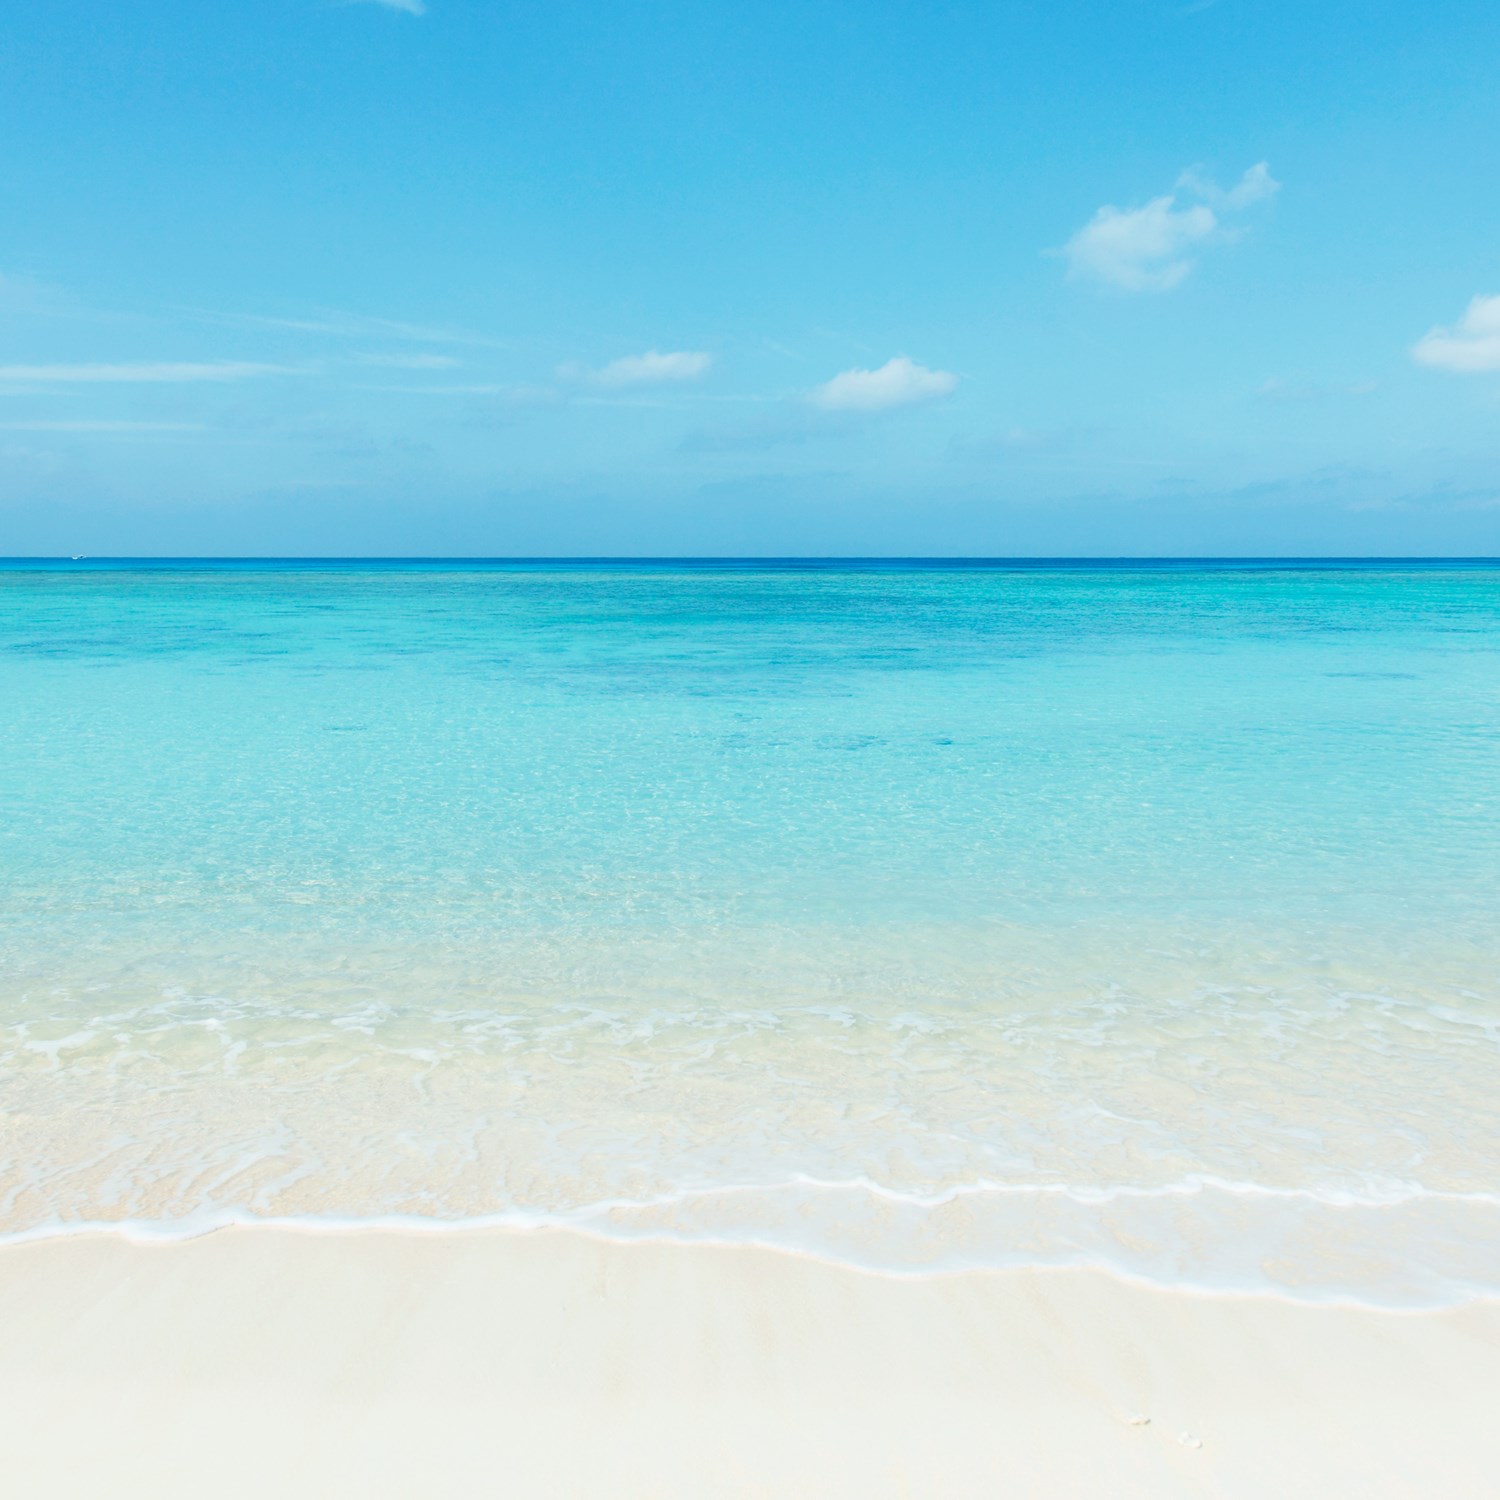 Okinawa beach, Japan = Shutterstock 4